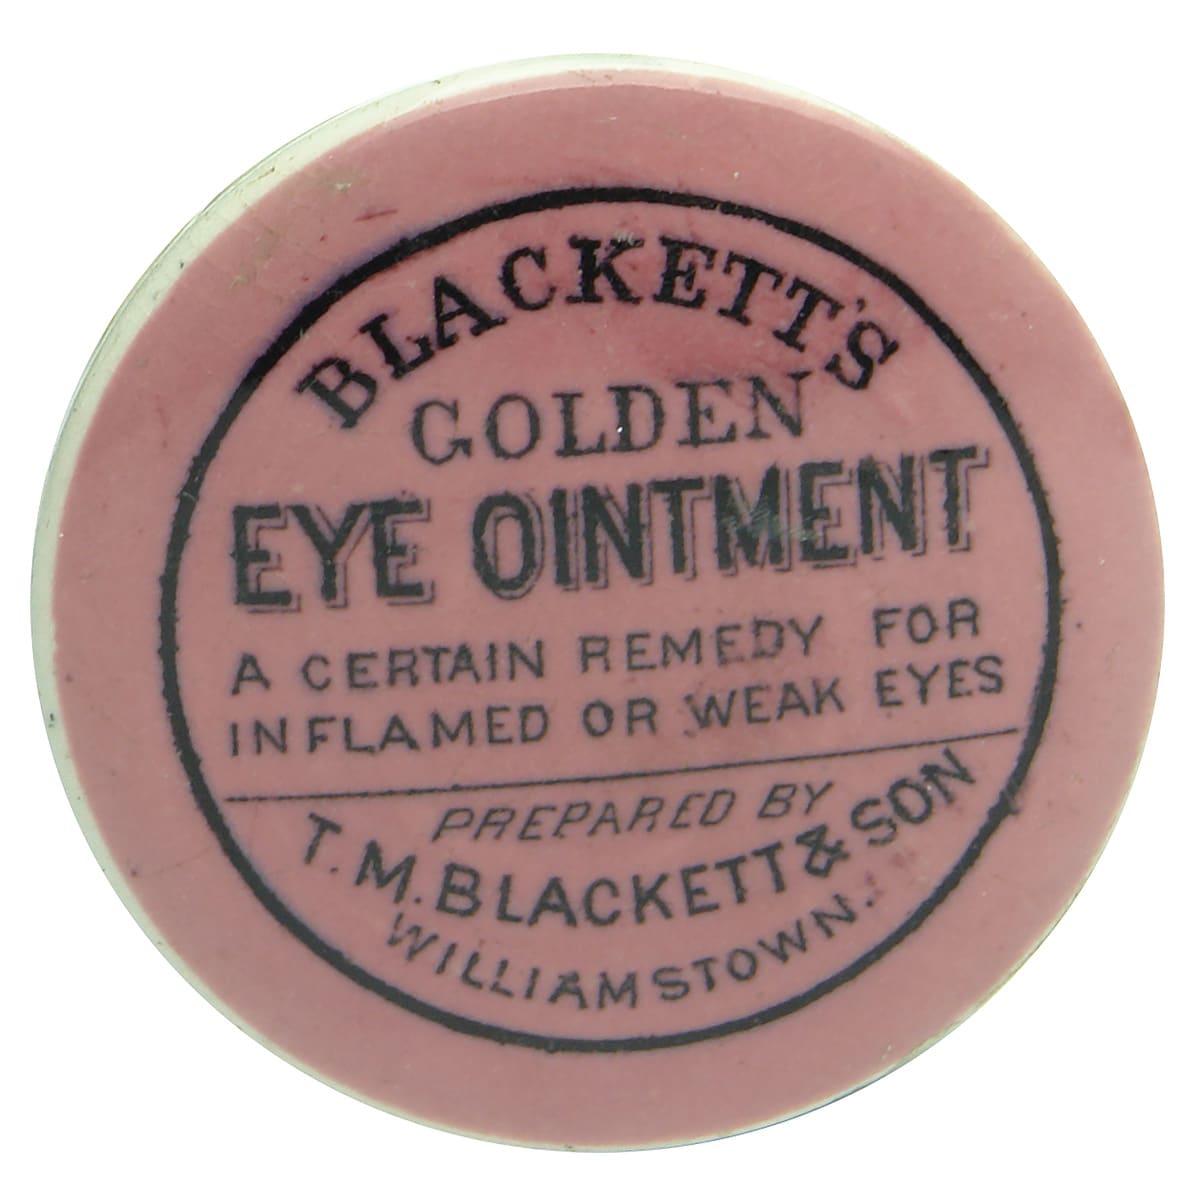 Blackett's Golden Eye Ointment Williamstown Pot Lid